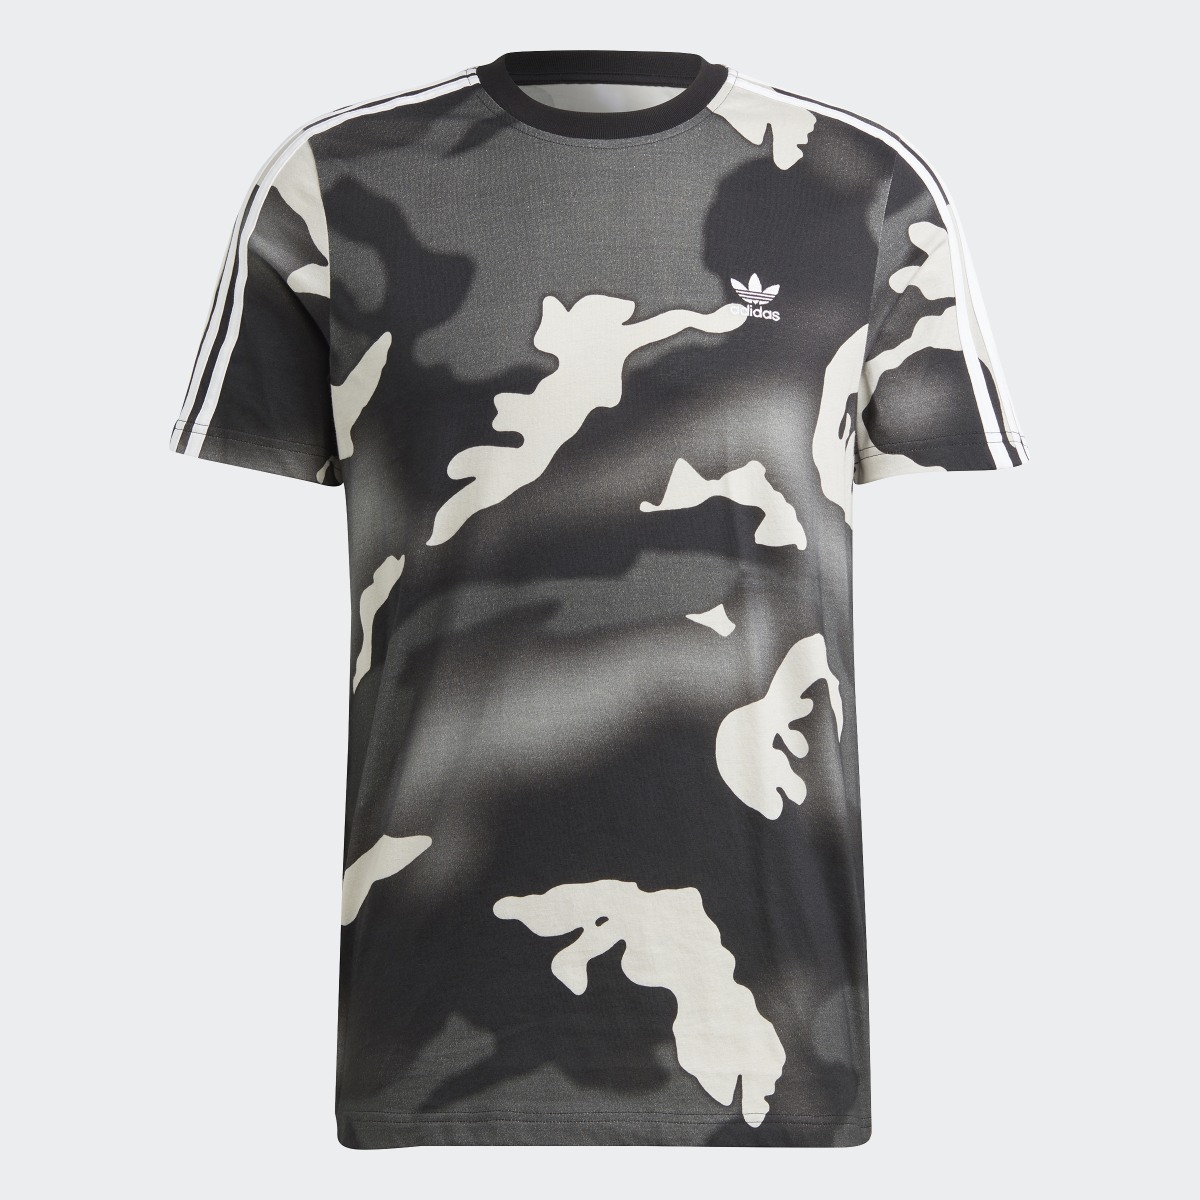 Adidas Graphics Camo Allover Print T-Shirt. 5